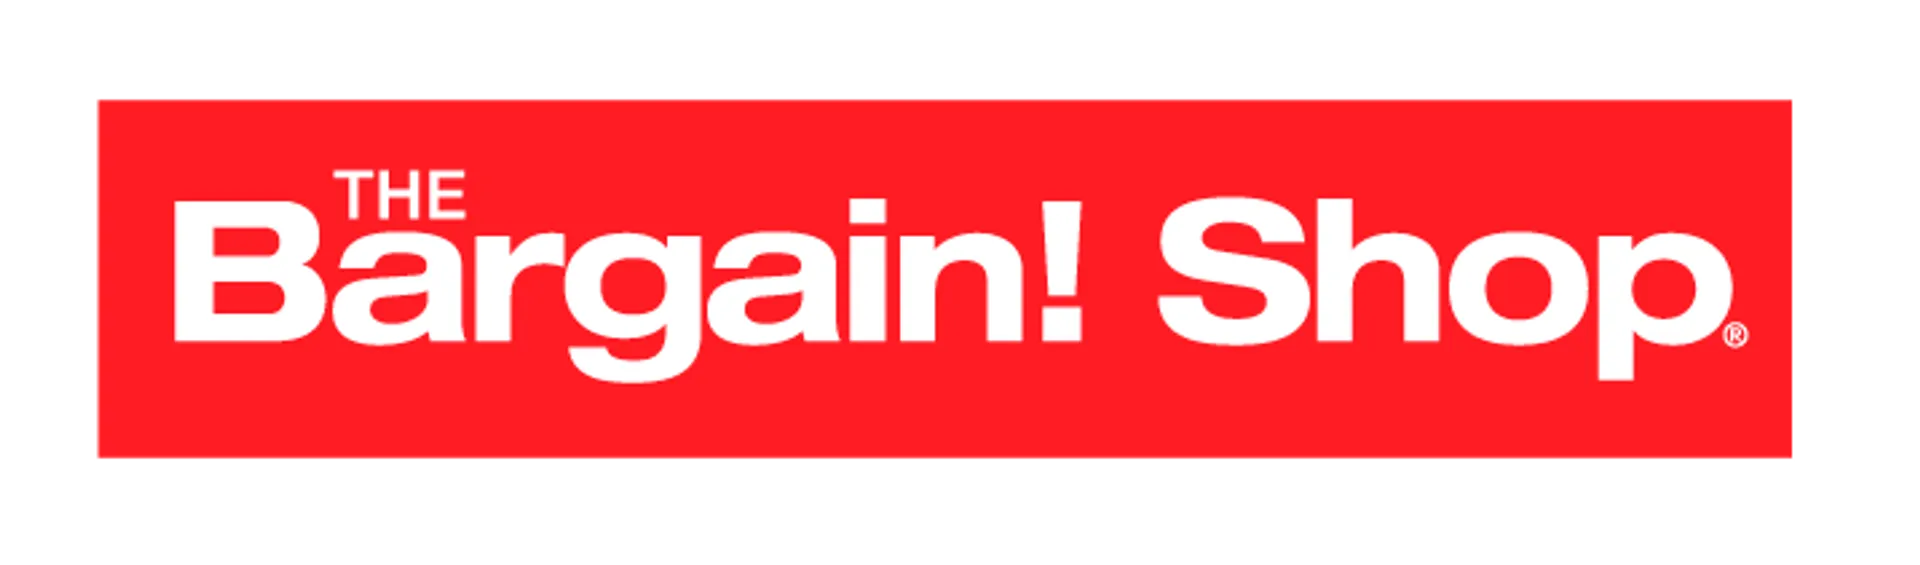 THE BARGAIN SHOP logo